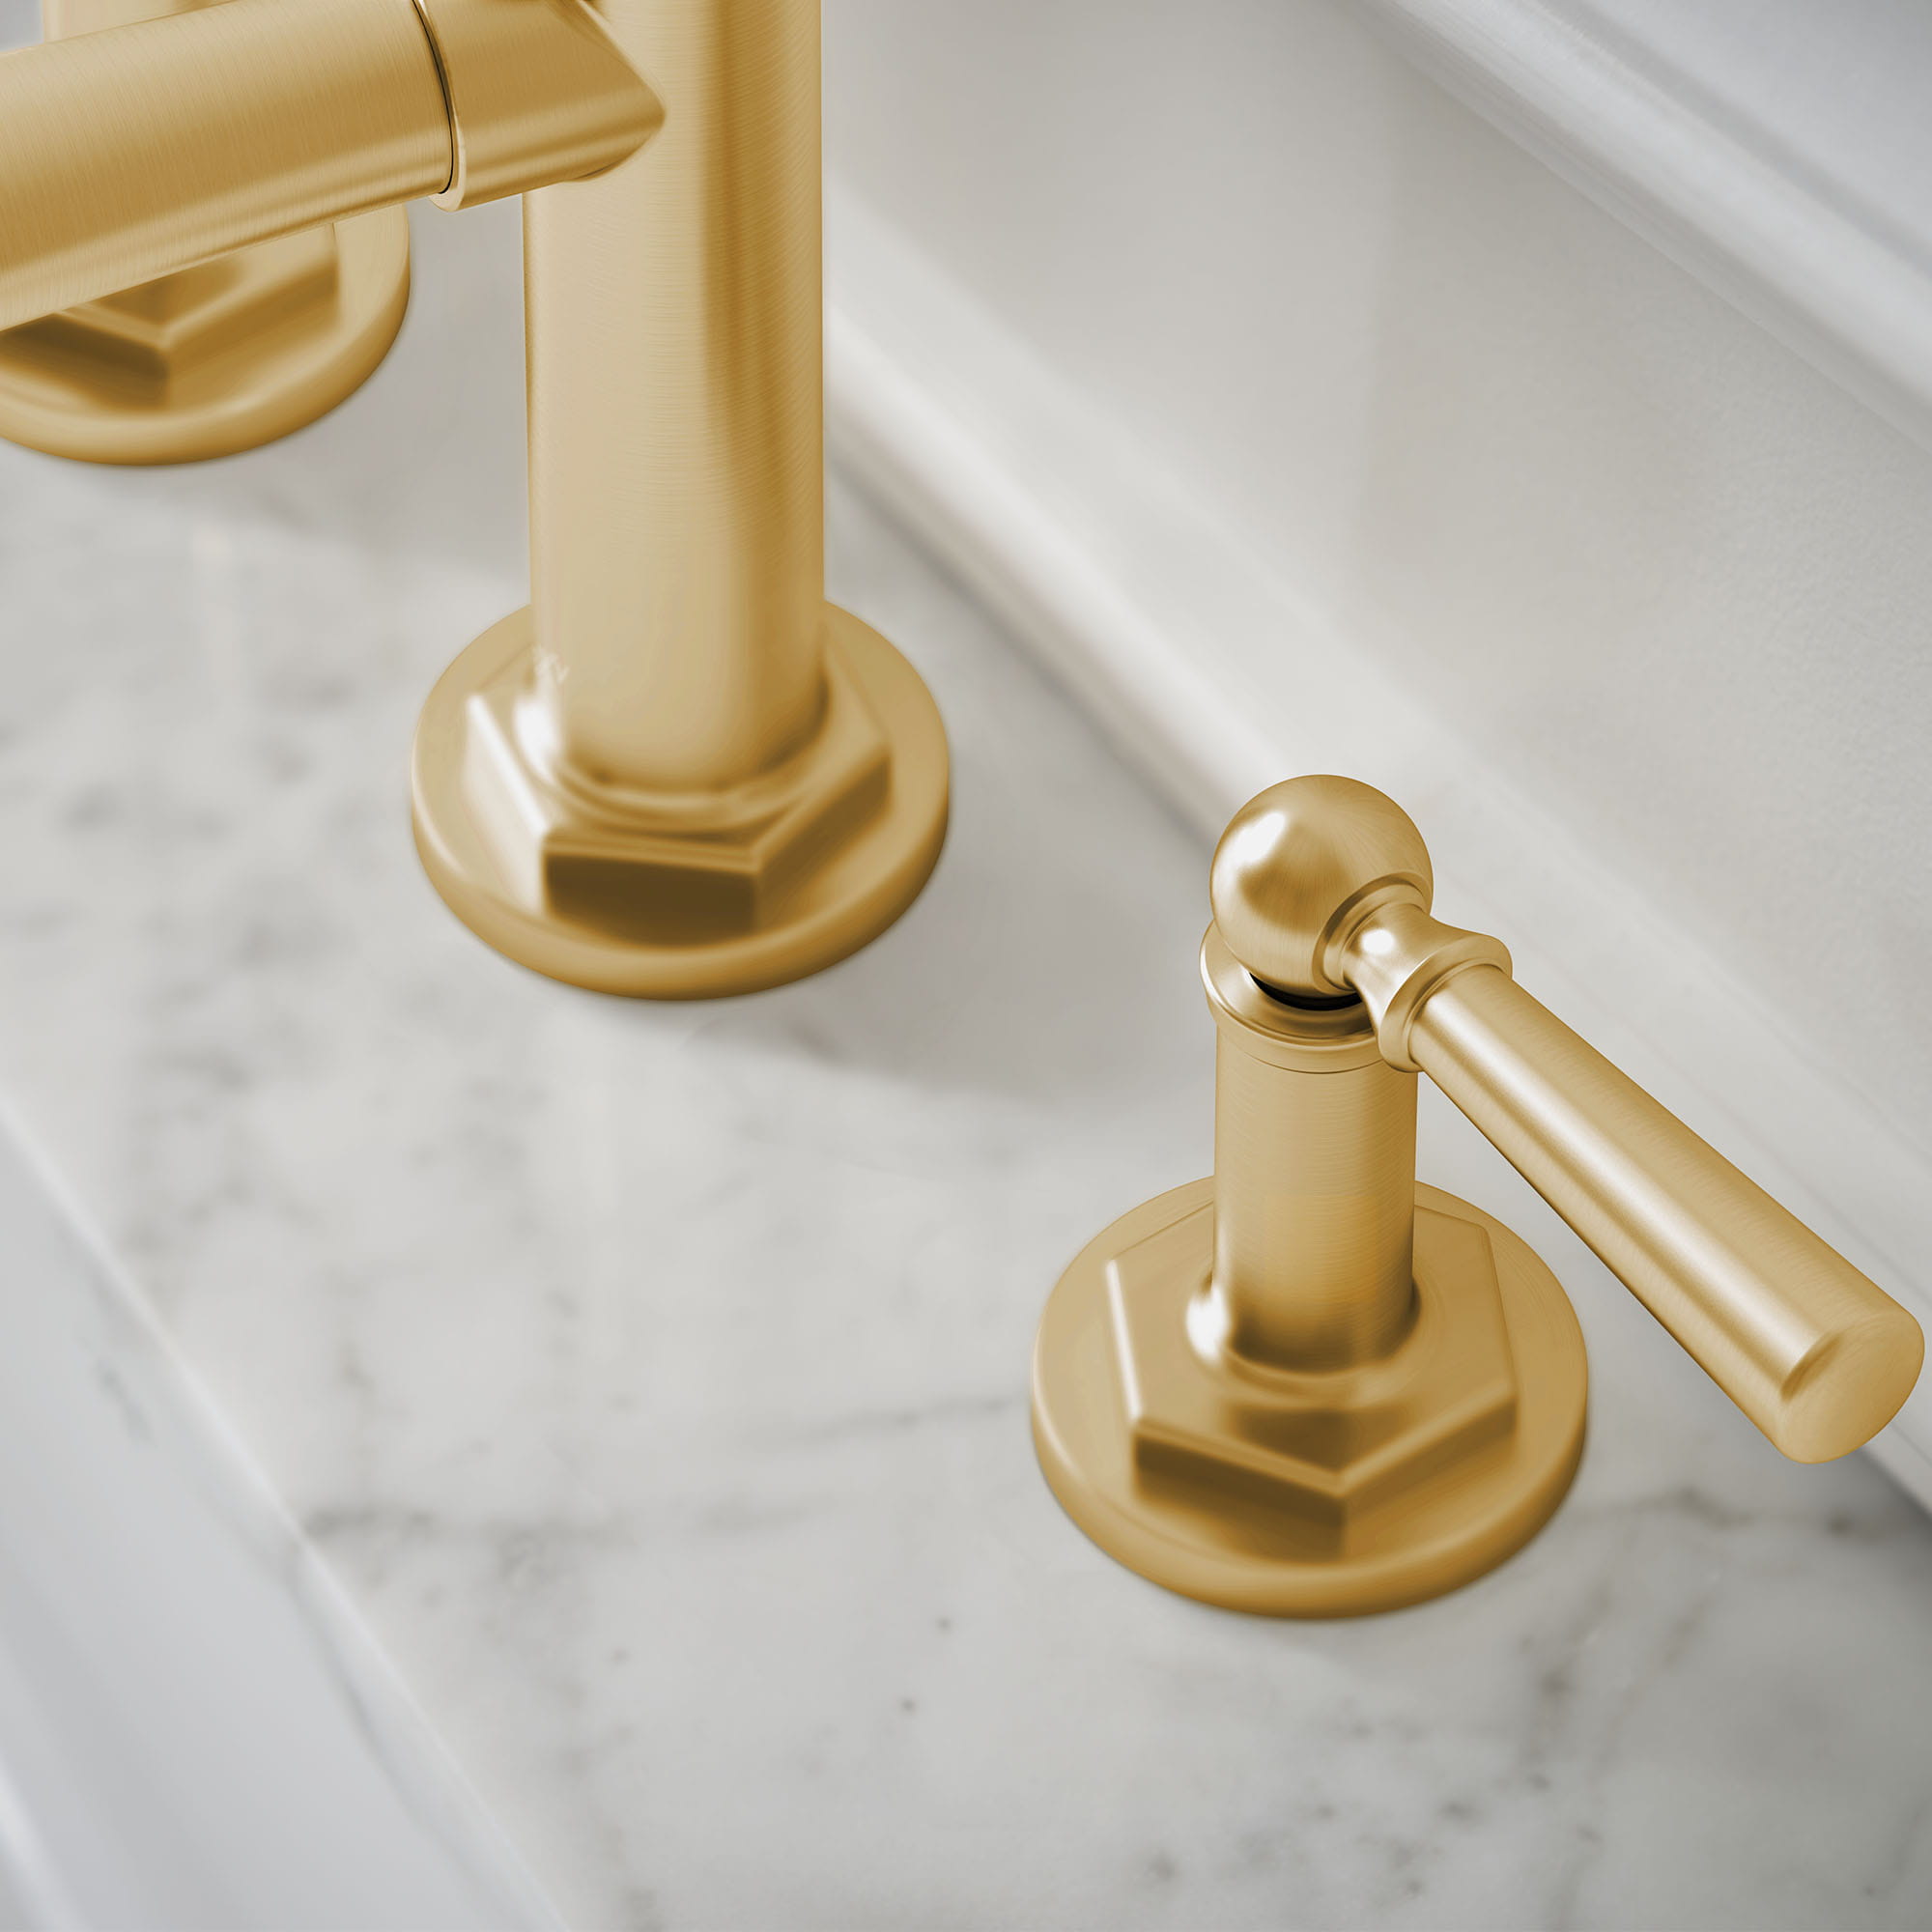 Oak Hill 2-Handle Widespread Bathroom Faucet with Lever Handles